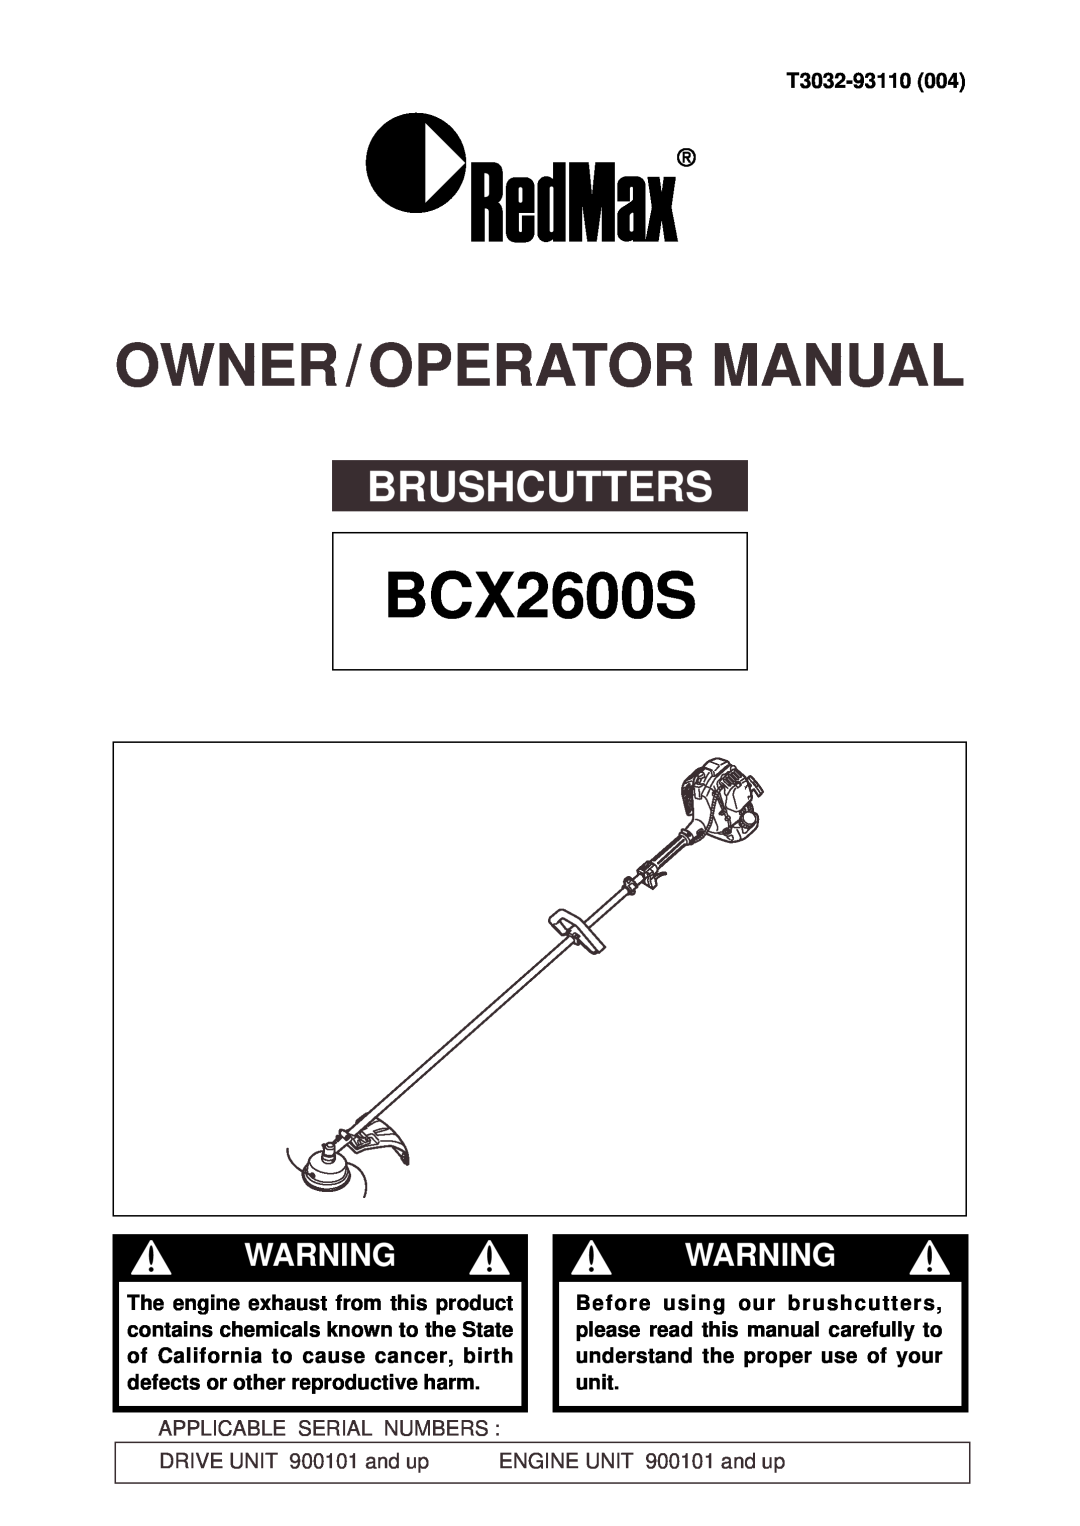 RedMax BCX2600S manual Brushcutters, T3032-93110, Owner / Operator Manual, Warningwarning 